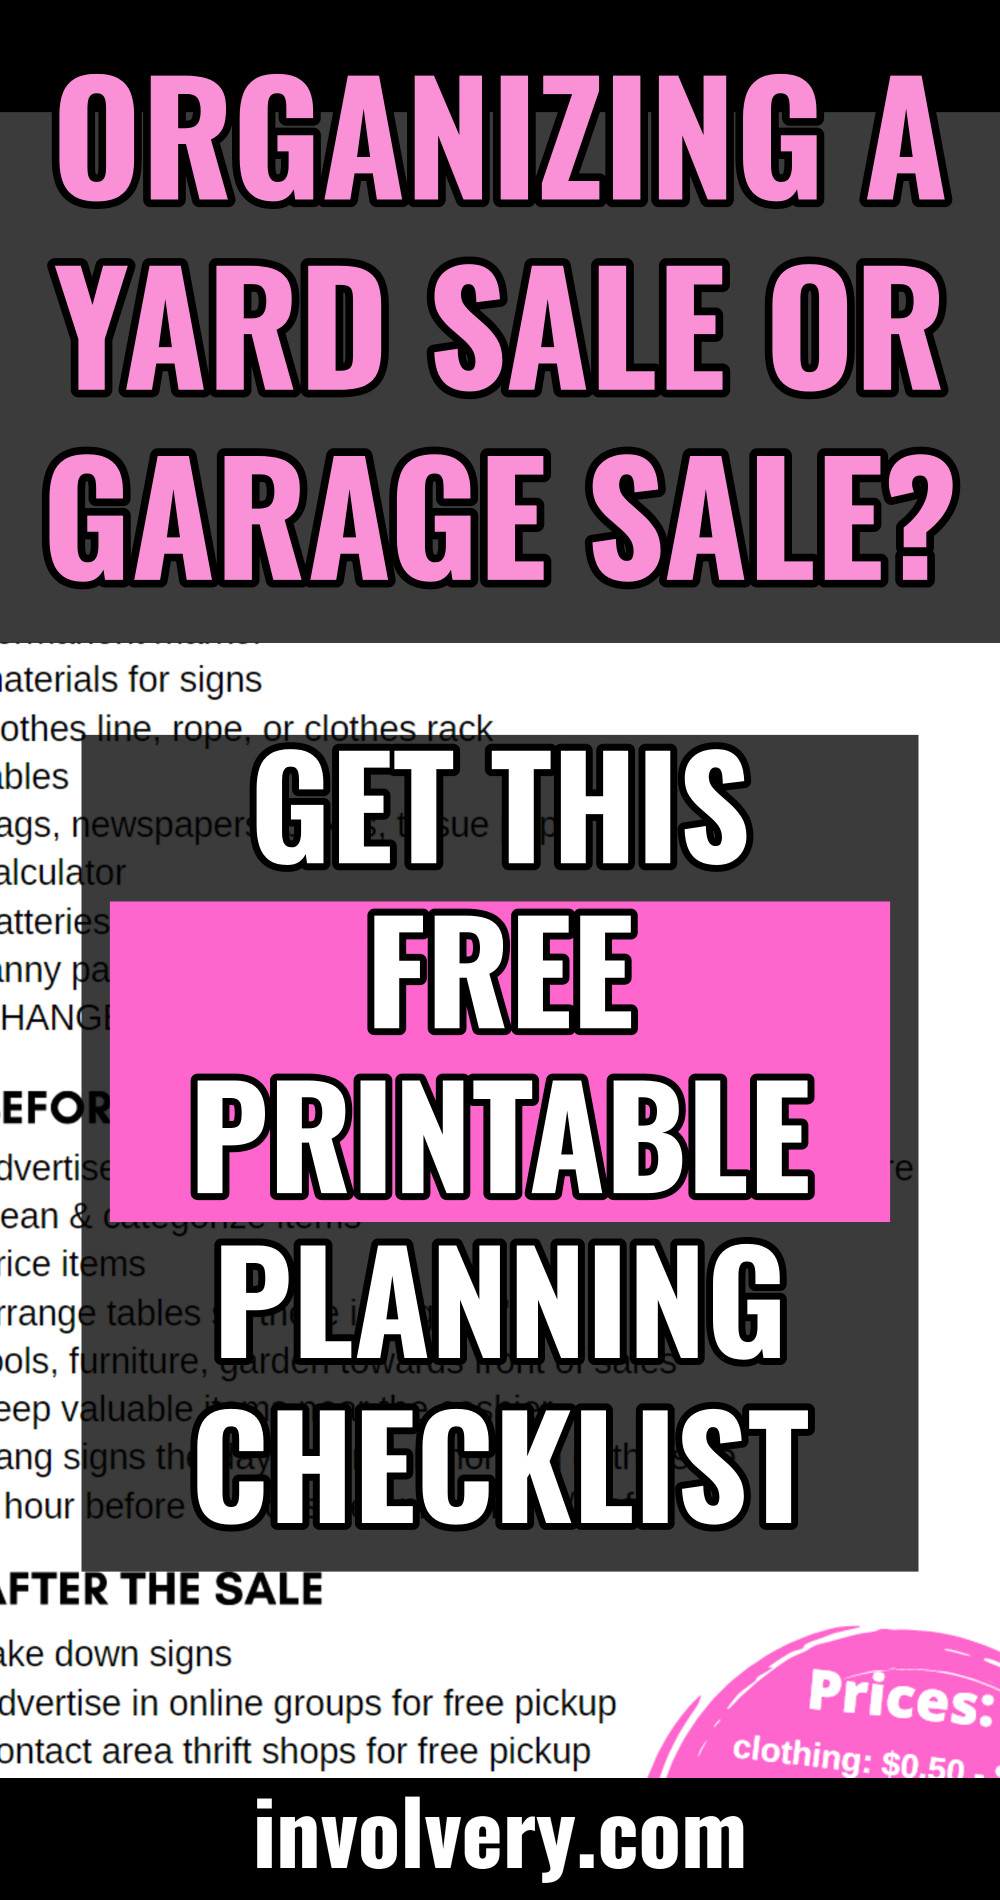 free printable garage sale planning checklist for yard sale organization